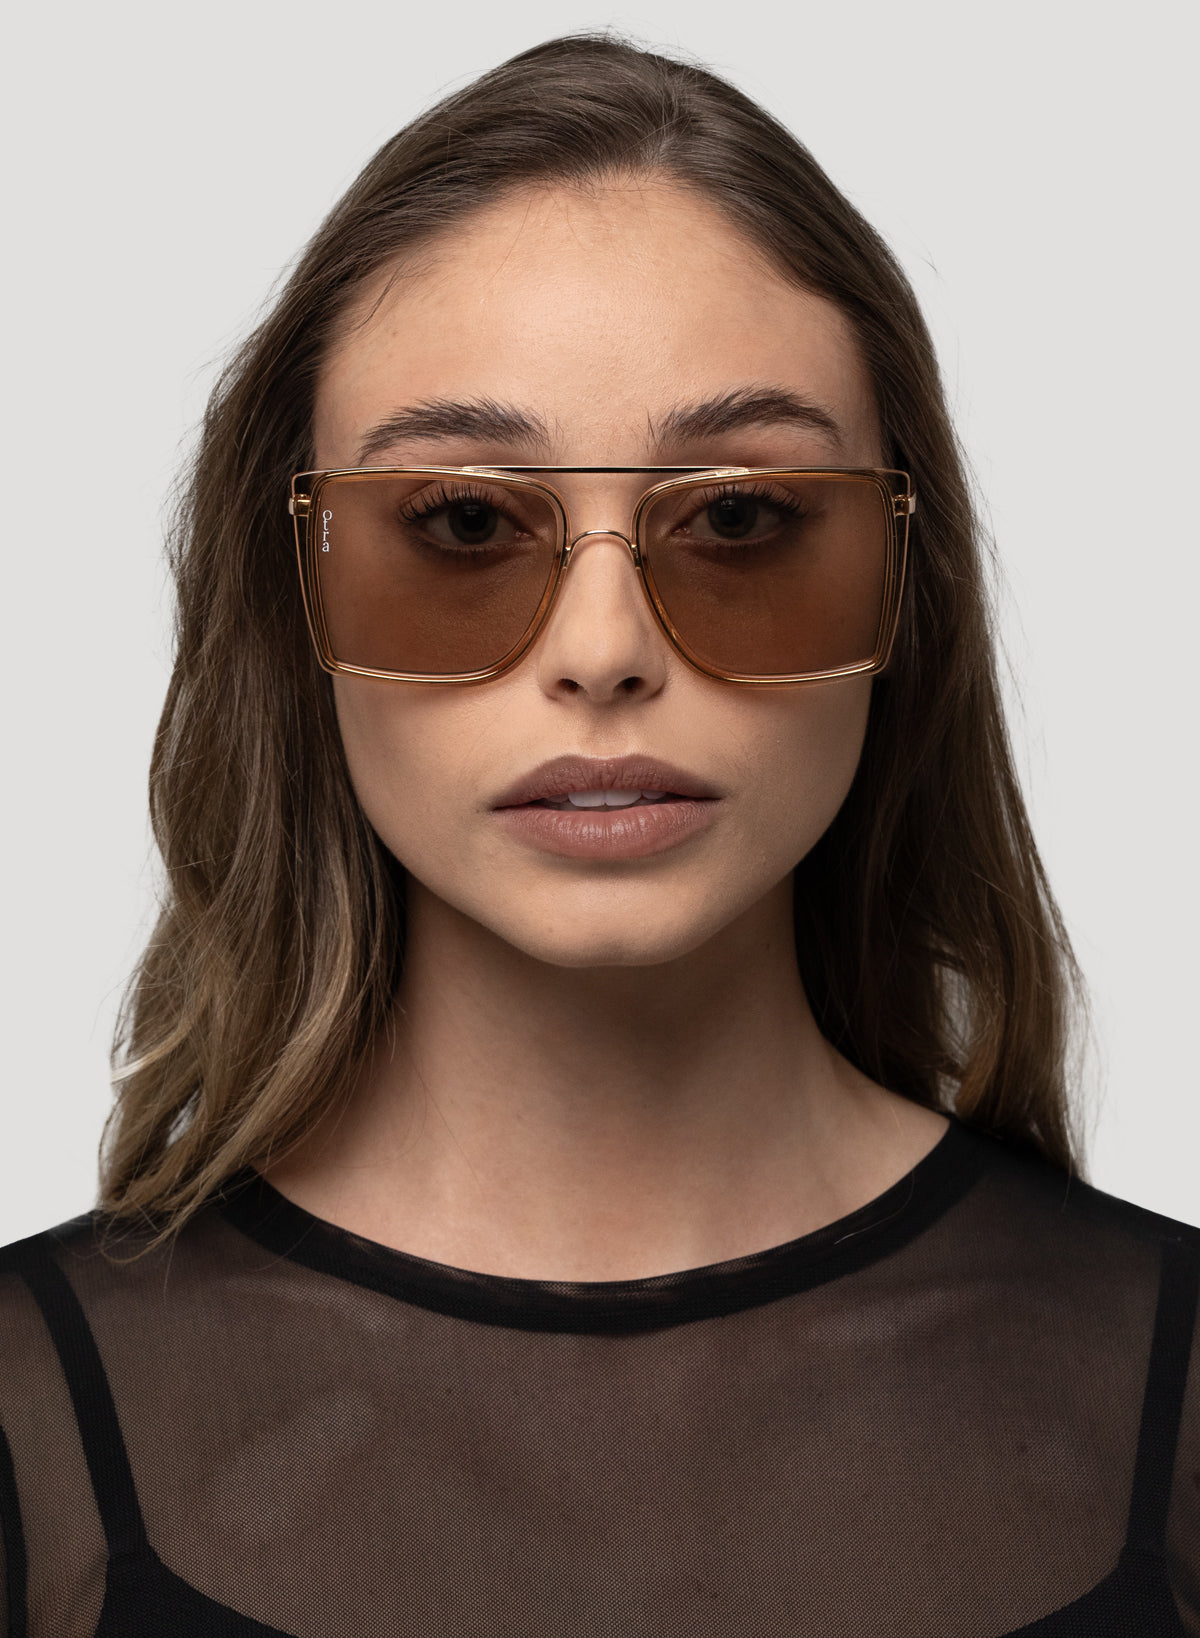 Model wearing Velda oversized square aviator sunglasses in gold